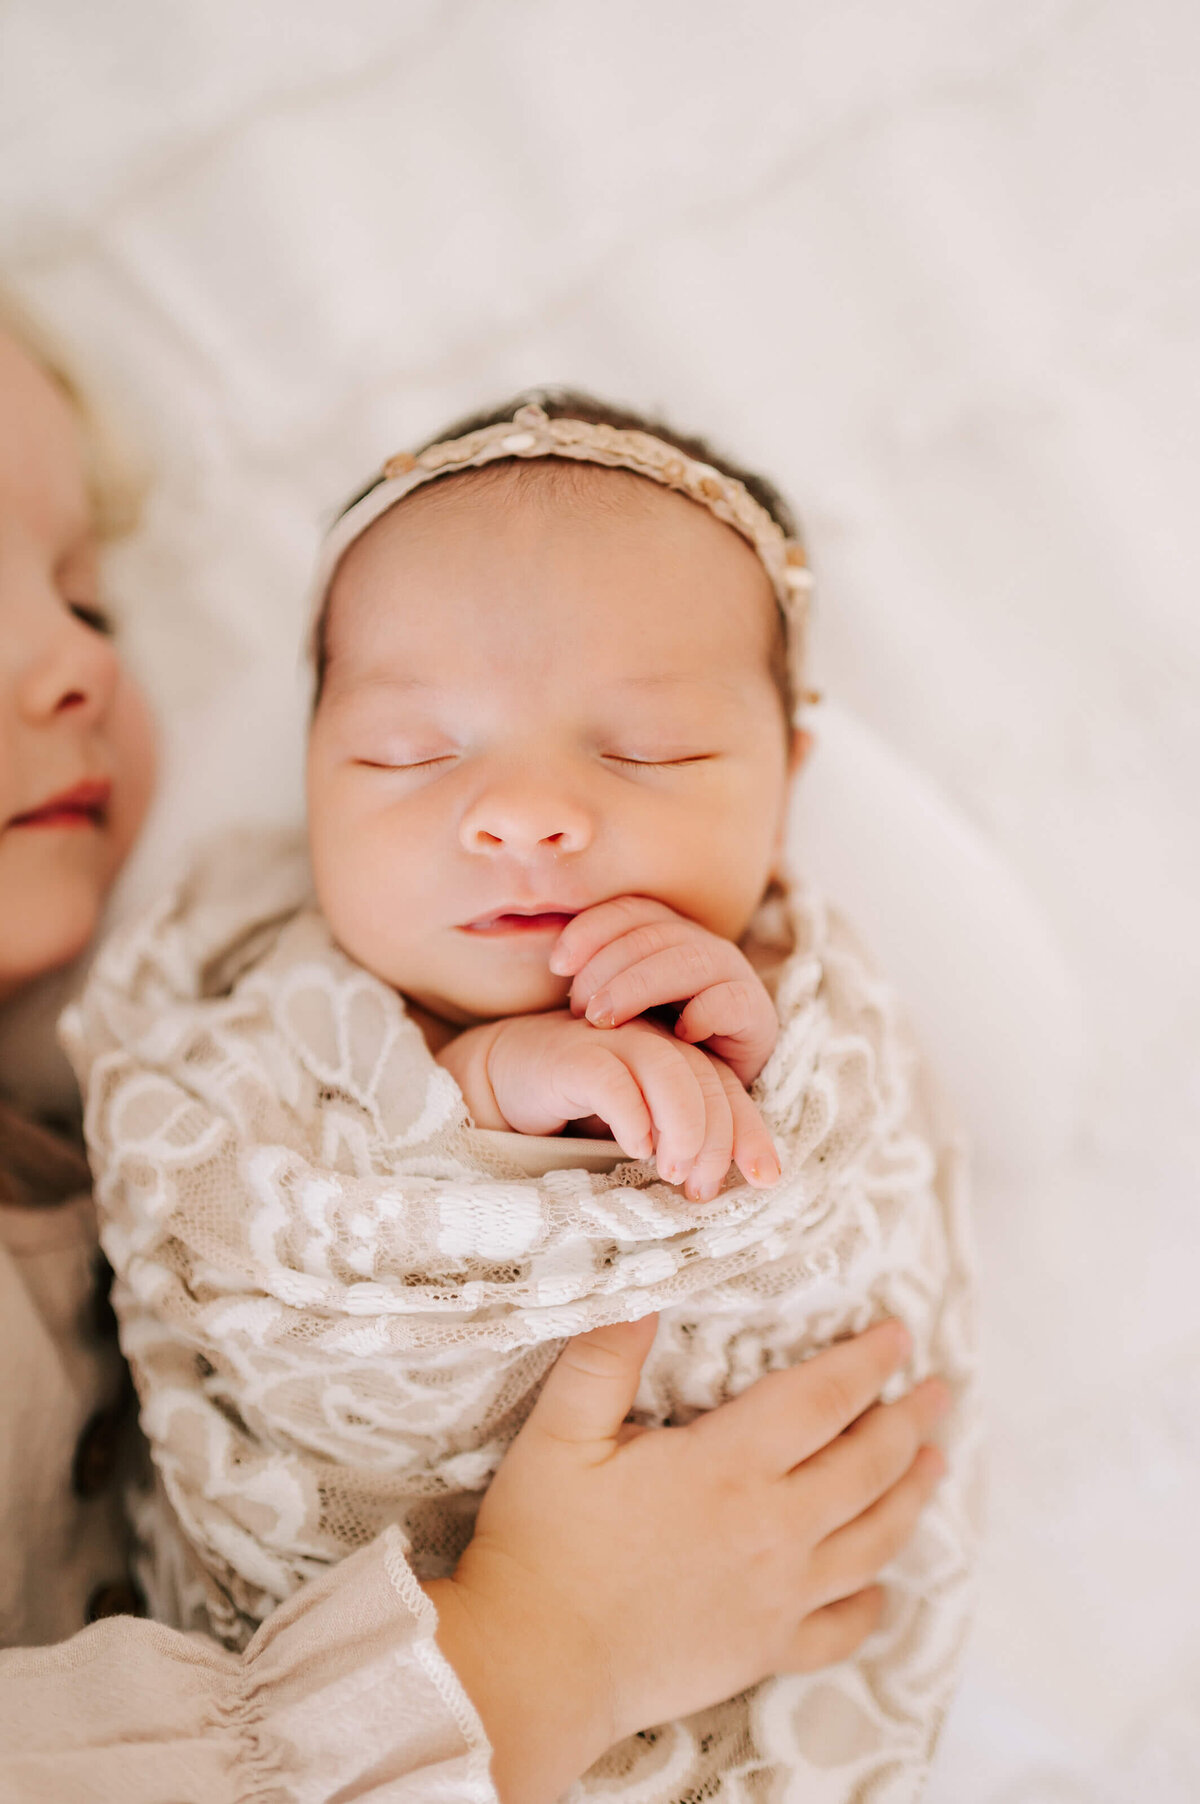 Springfield MO newborn photographer Jessica Kennedy of The XO Photography captures newborn baby girl sleeping on bed